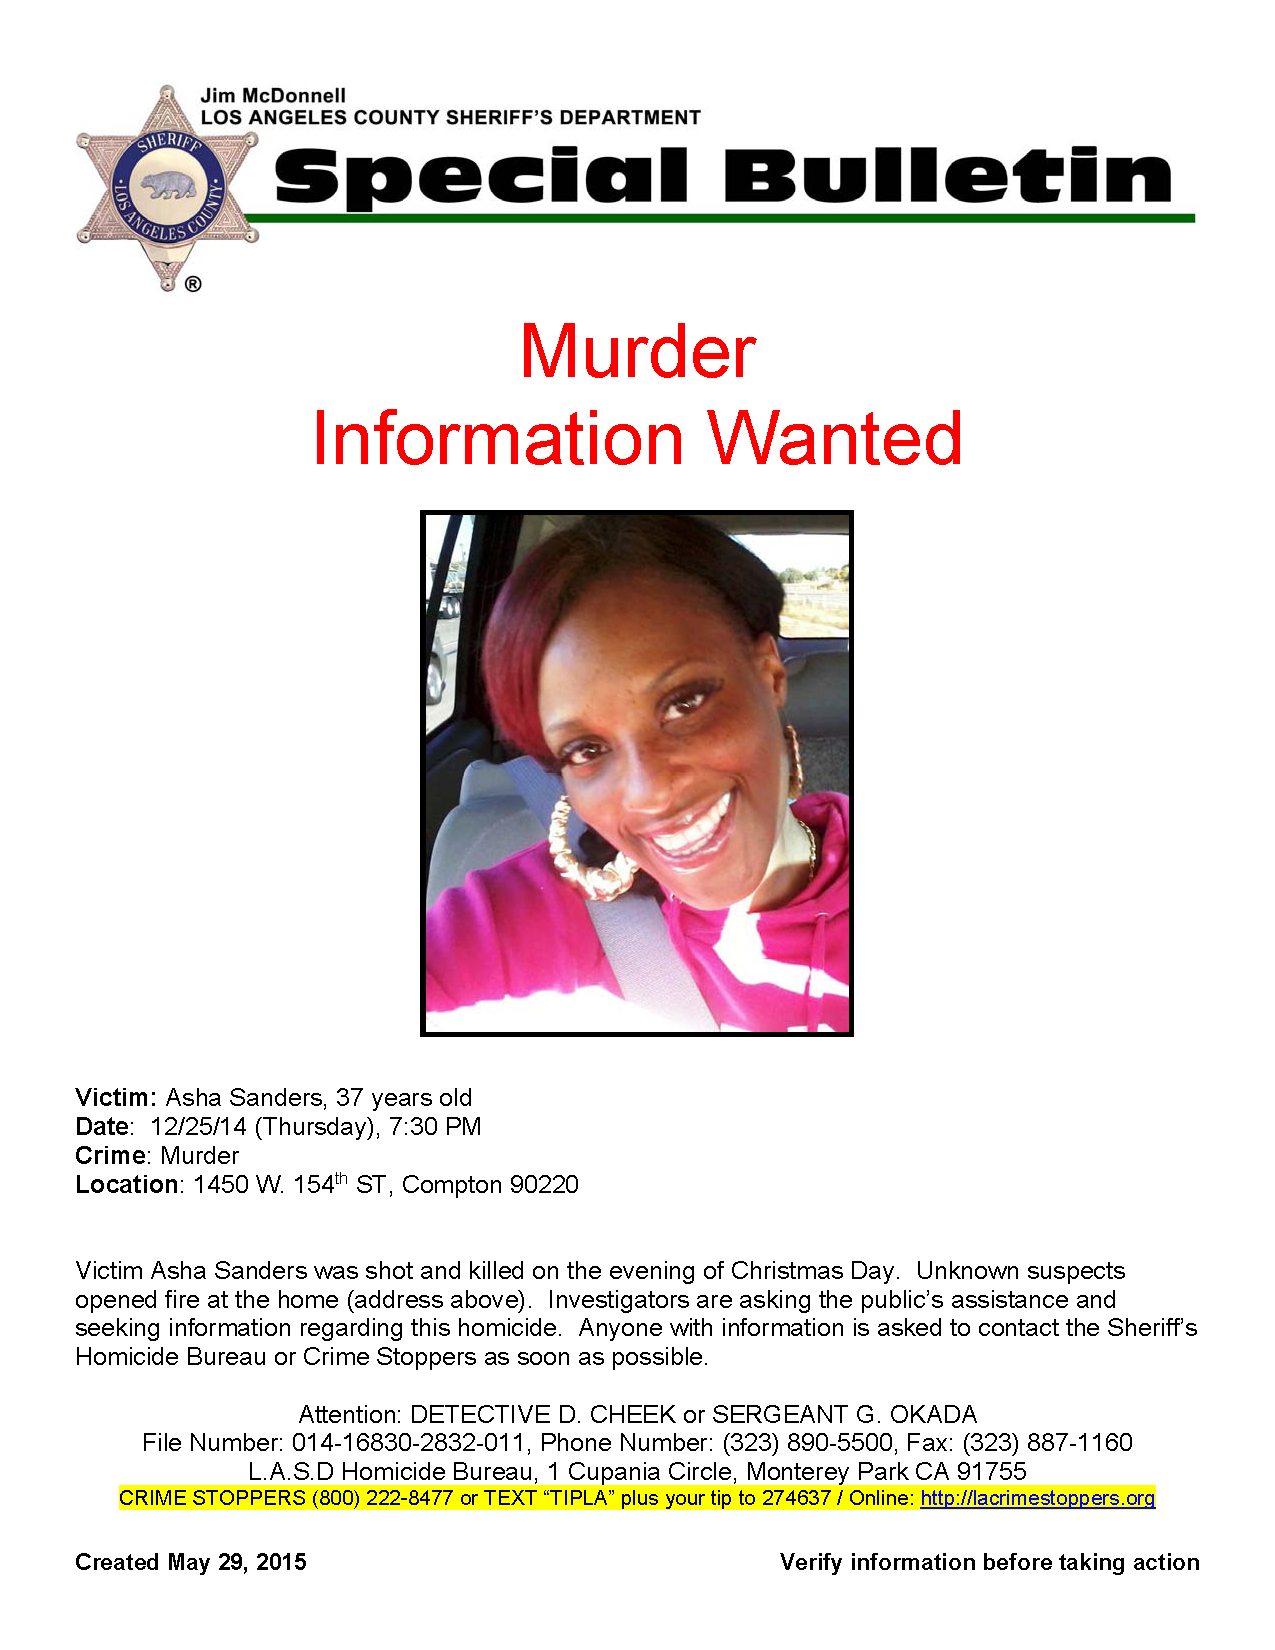 Murder Investigation Asha Sanders